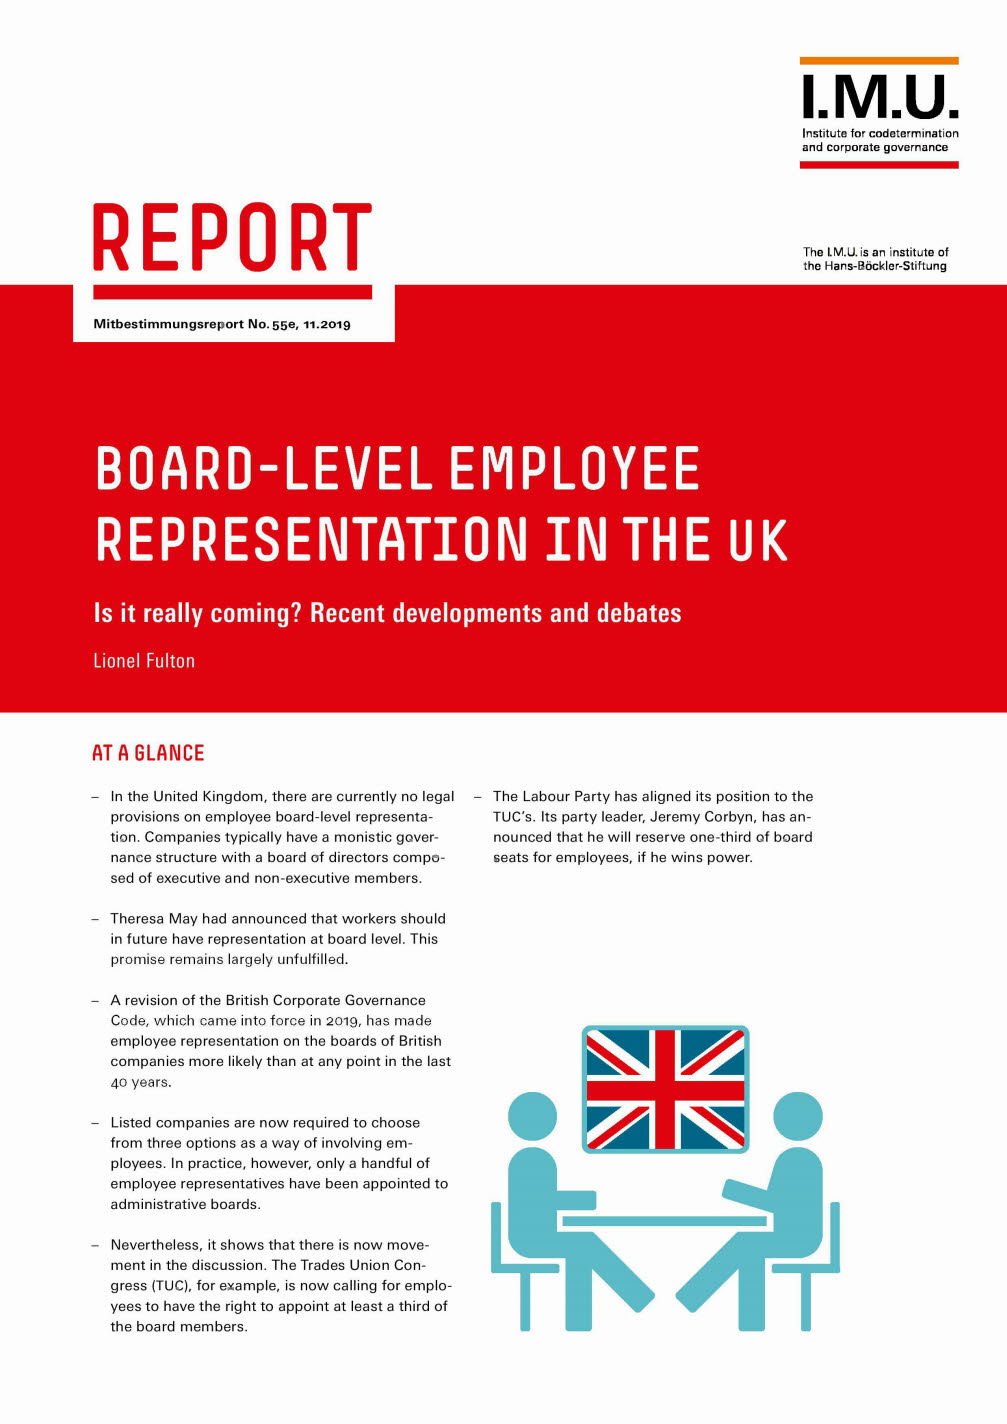 Board-level employee representation in the UK